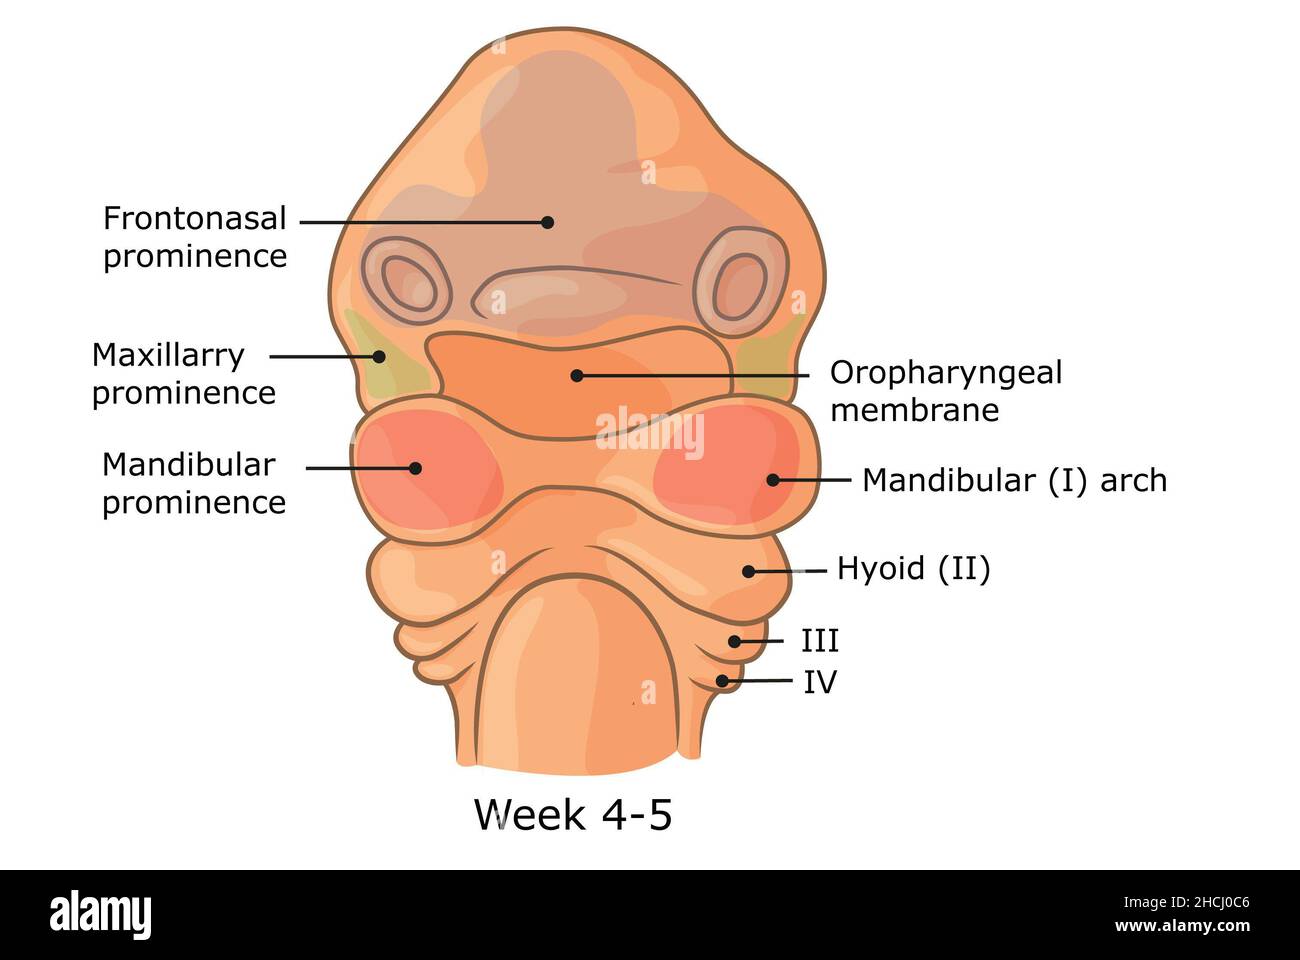 Development of external structures of human face week 4 - 5. Stock Photo